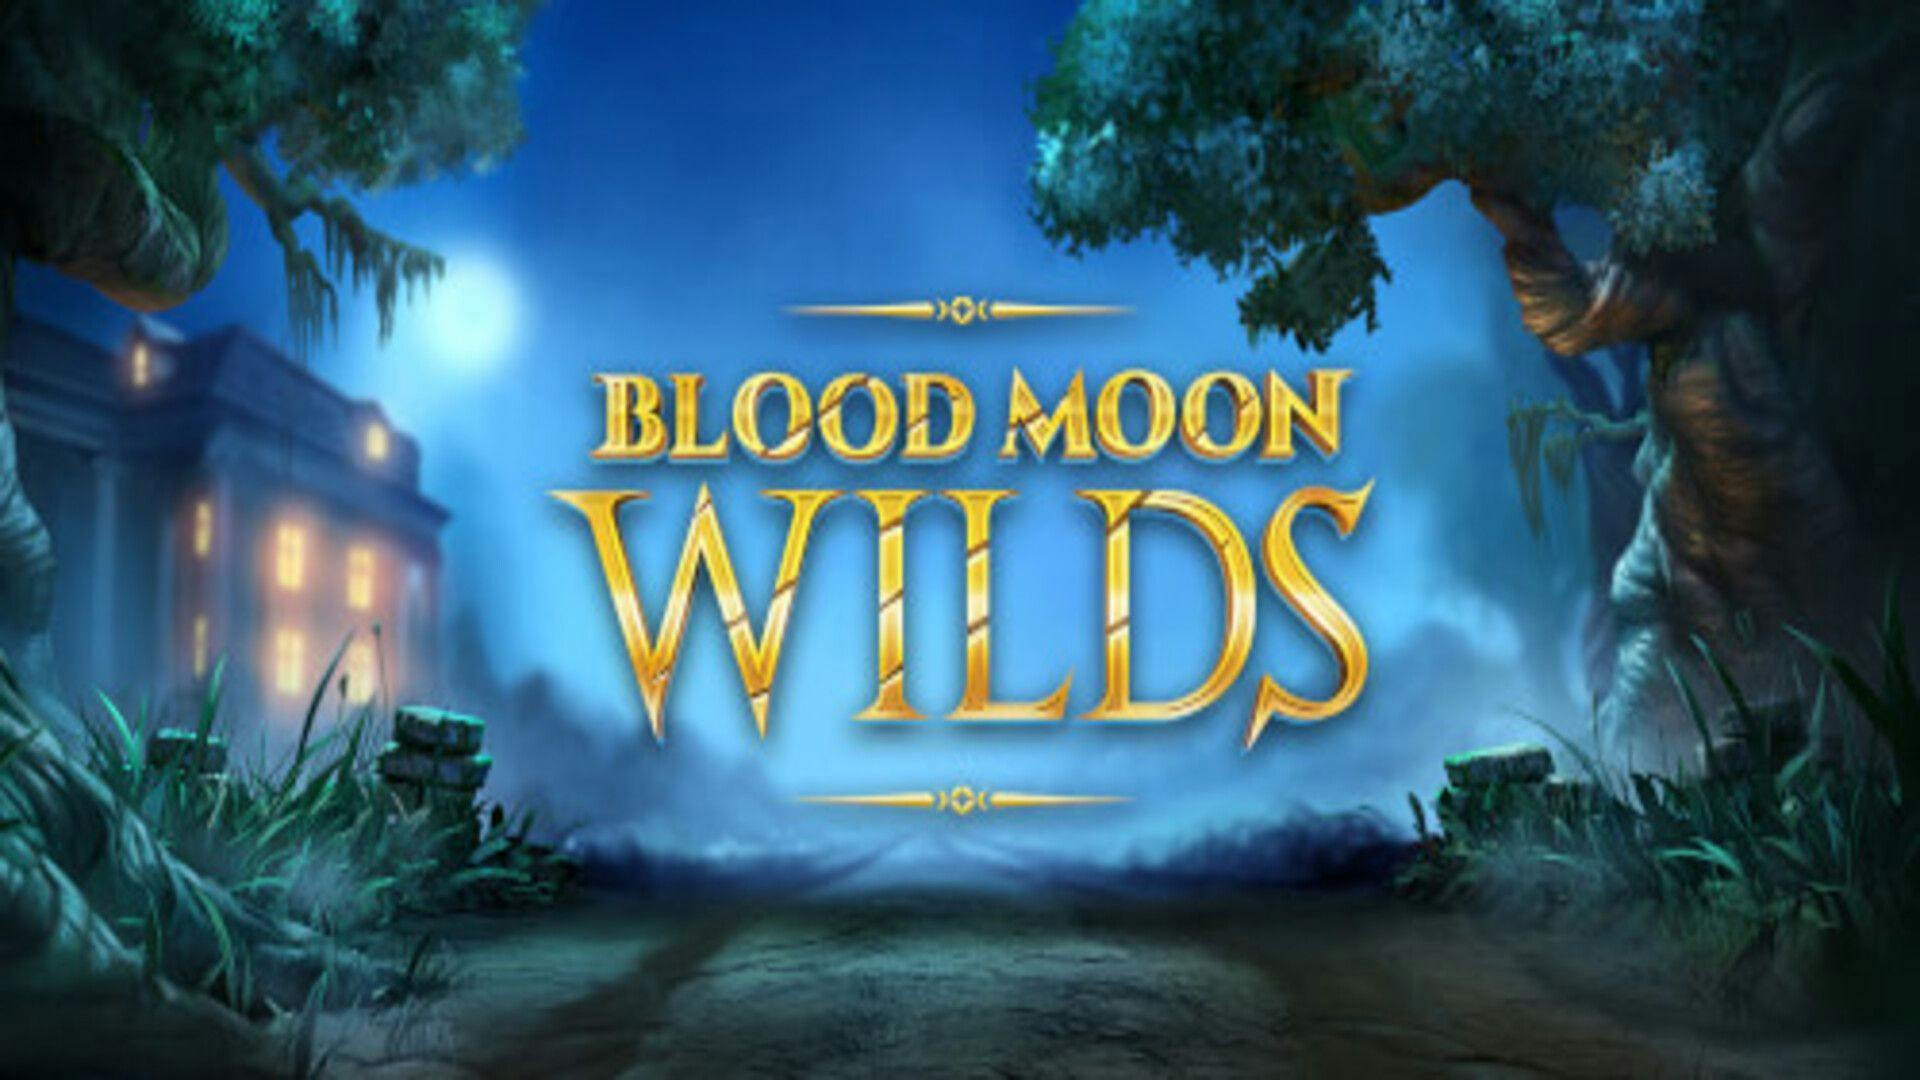 Blood Moon Wilds Slot Machine Free Game Play